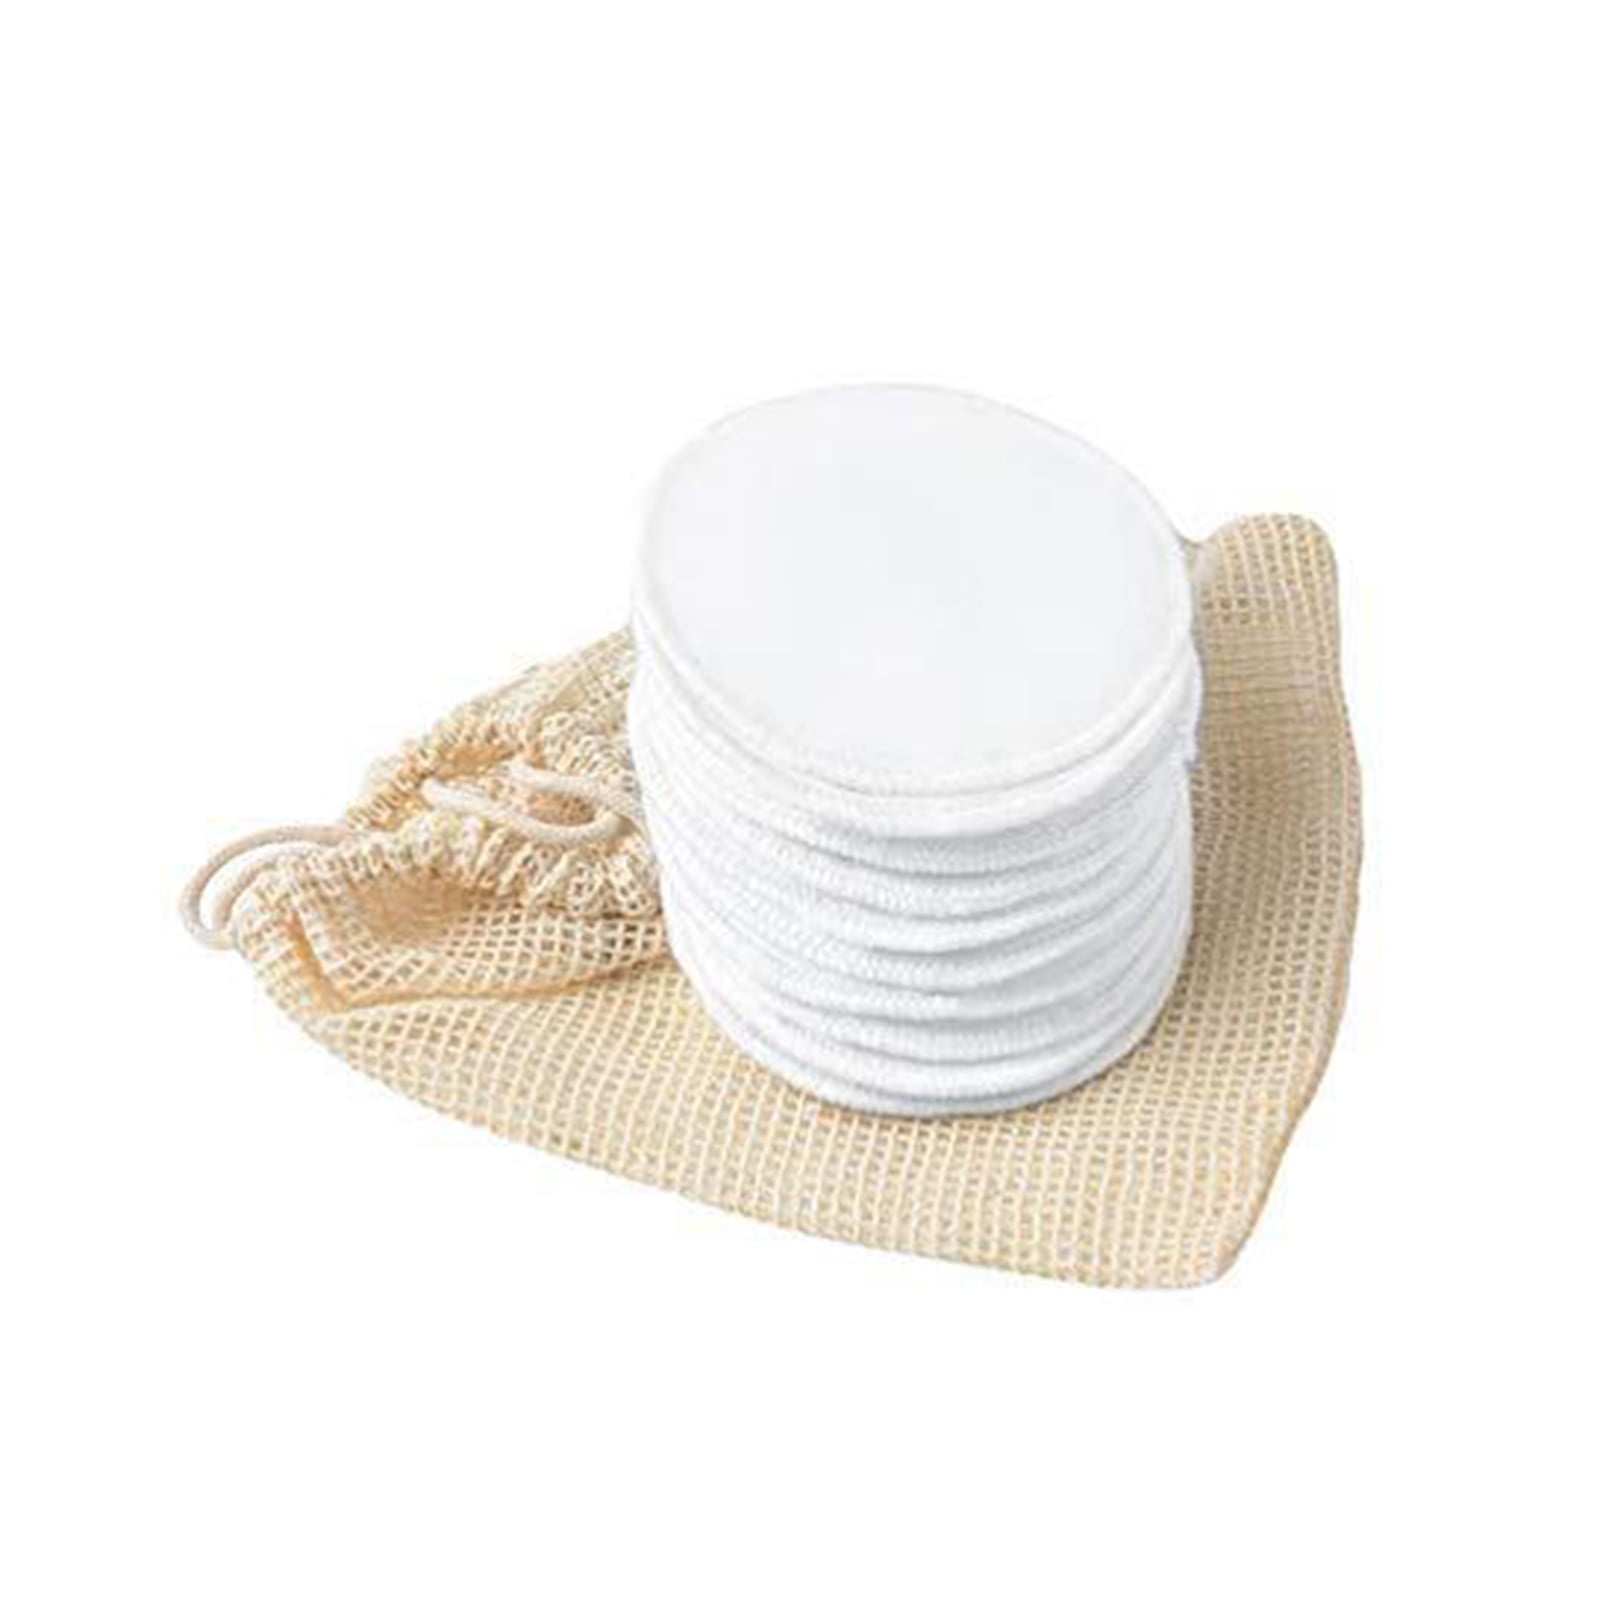 Amdohai 10PCS Reusable Cotton Rounds Makeup Remover Cotton Pads Reusable Facial Cleansing Rounds Toner Pads Makeup with Laundry Bag Bamboo Washable | Walmart Canada